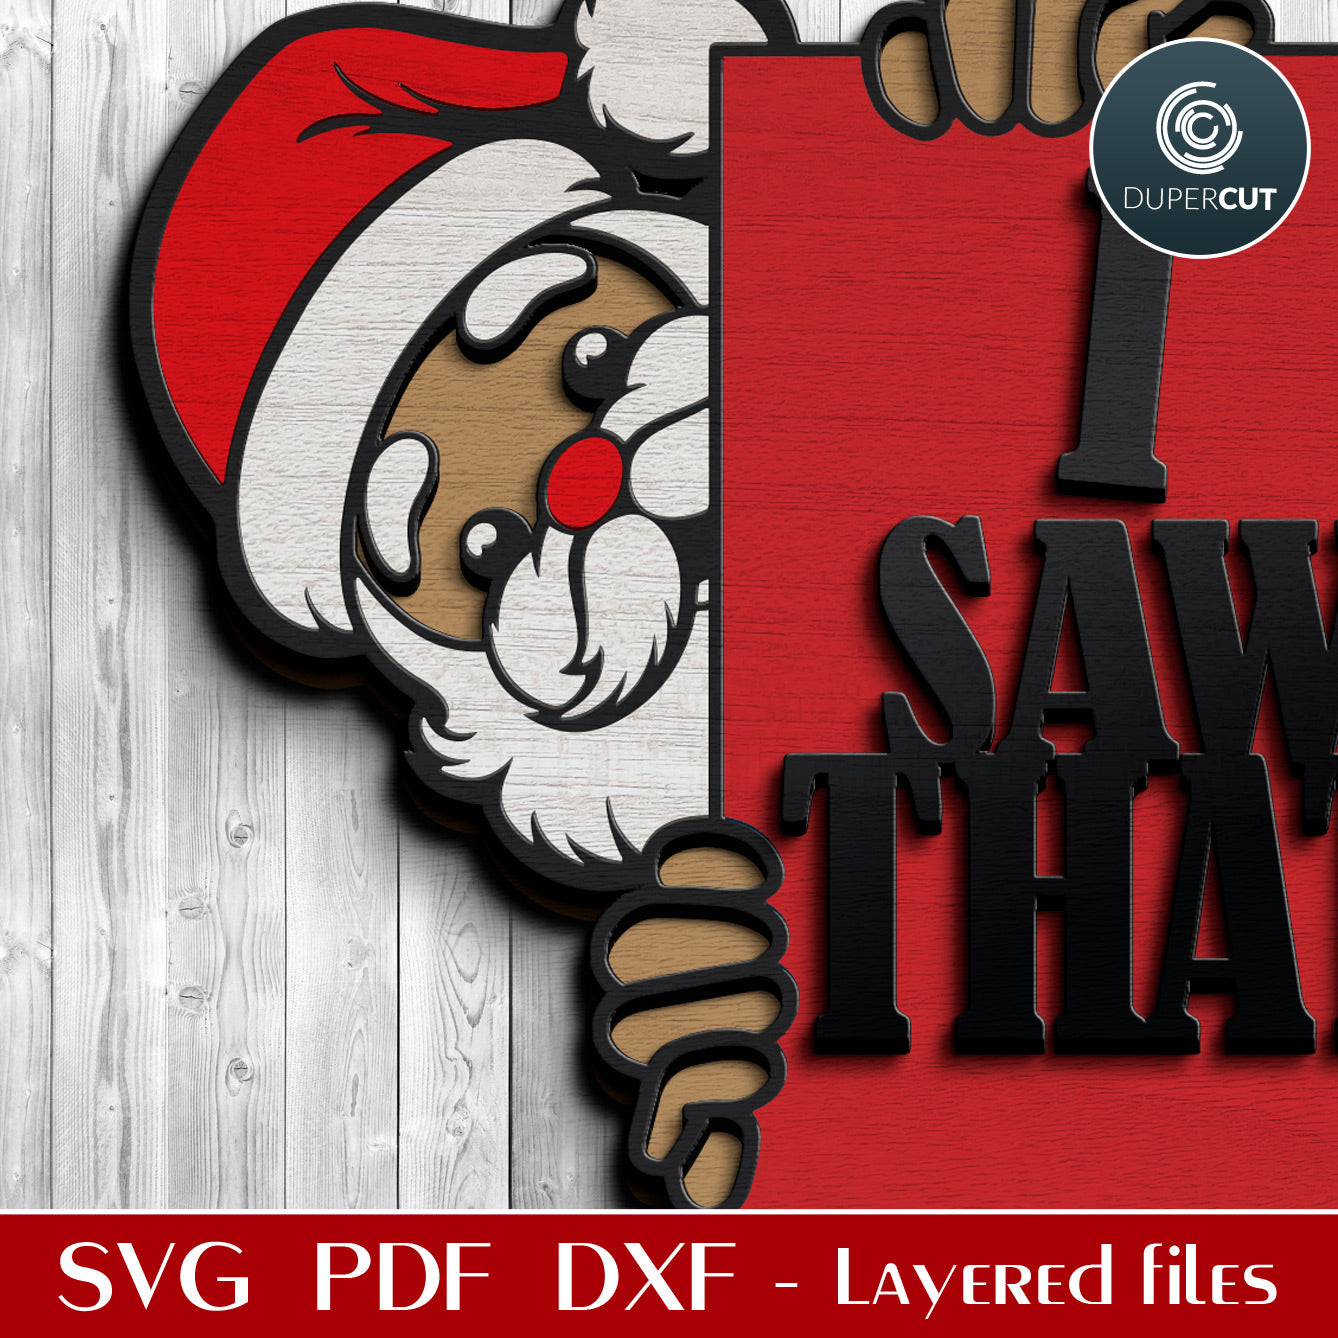 Peeking Santa "I Saw That" funny sign Christmas decoration - SVG DXF vector layered files for Glowforge, Cricut, X-tool, CNC laser machines by www.DuperCut.com